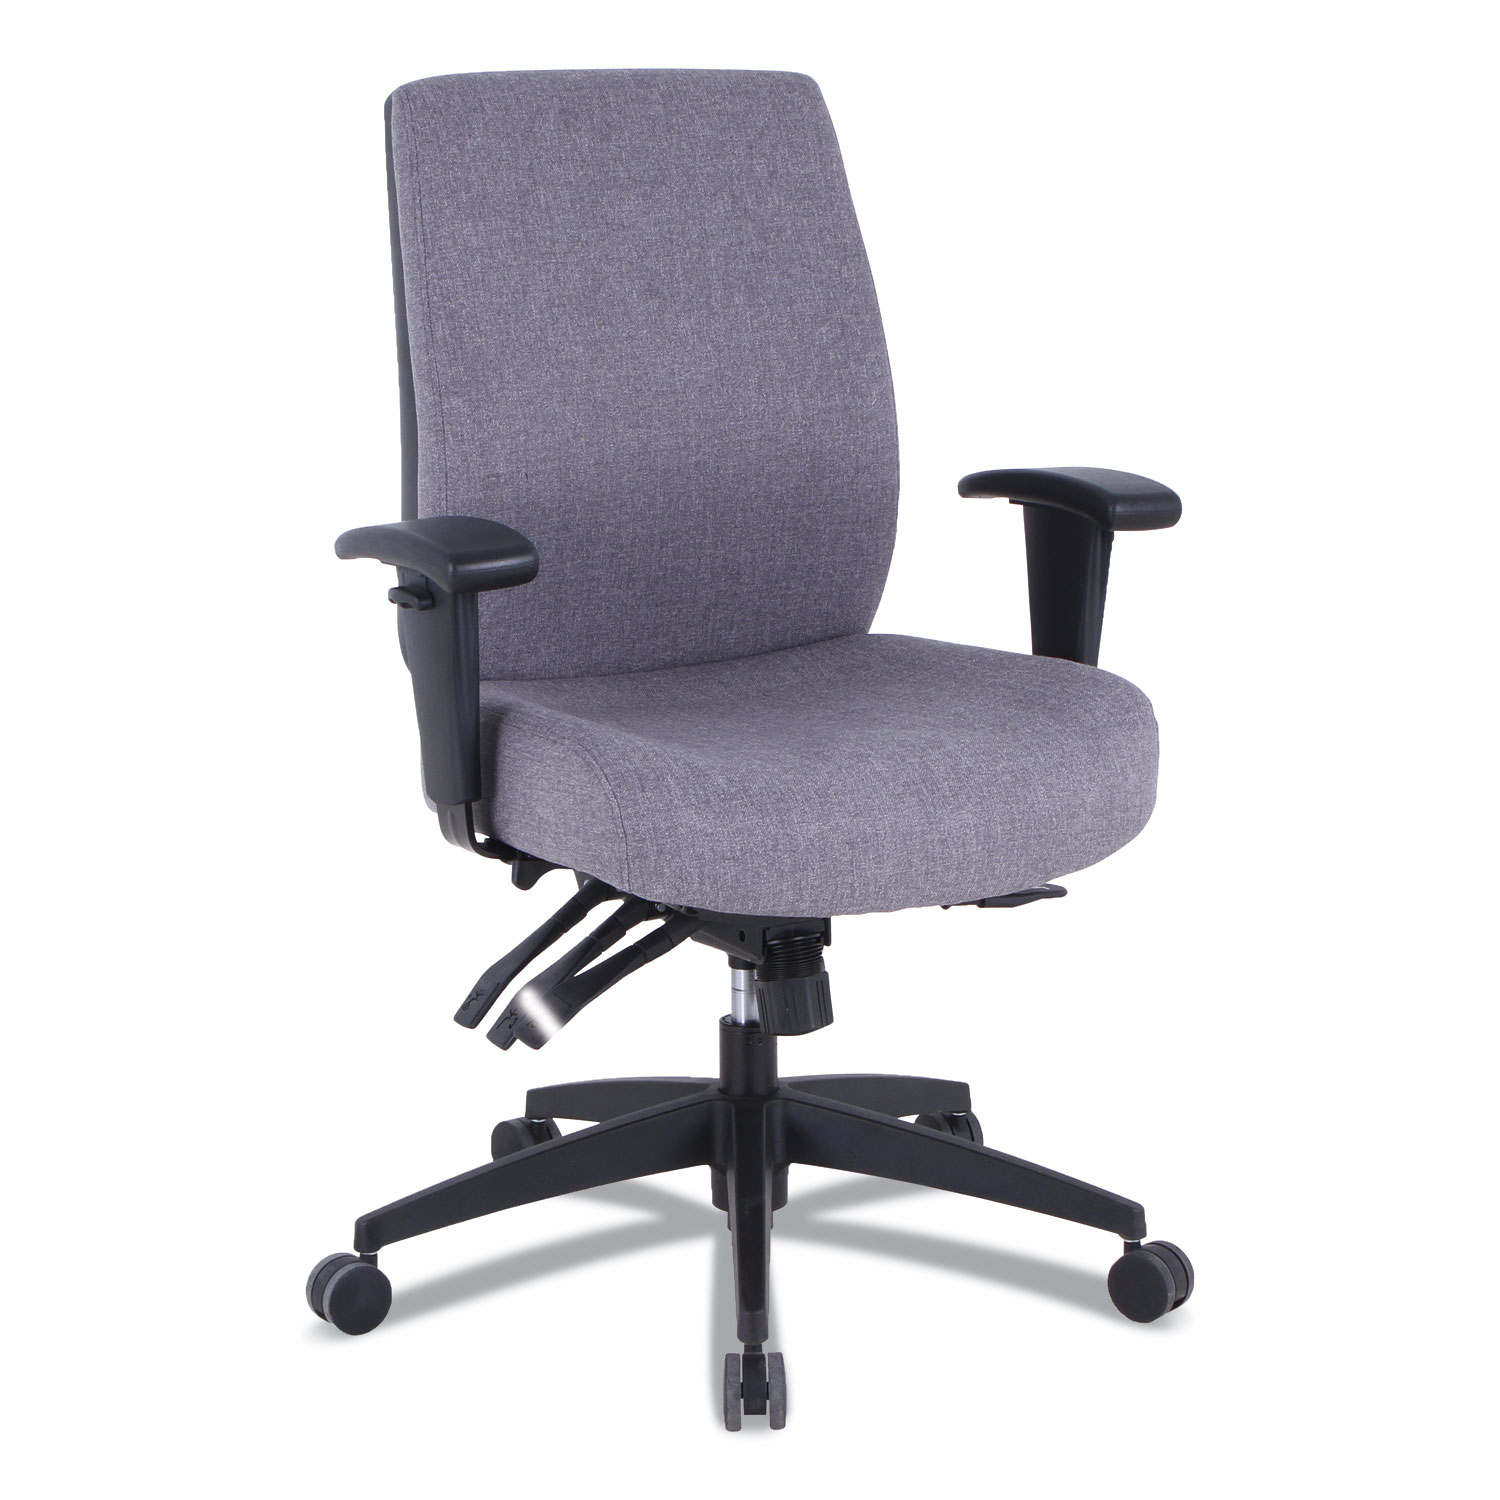  Alera HPT4141 Alera Wrigley Series 24/7 High Performance High-Back Multifunction Task Chair, Up to 275 lbs., Gray Seat/Back, Black Base (ALEHPT4141) 